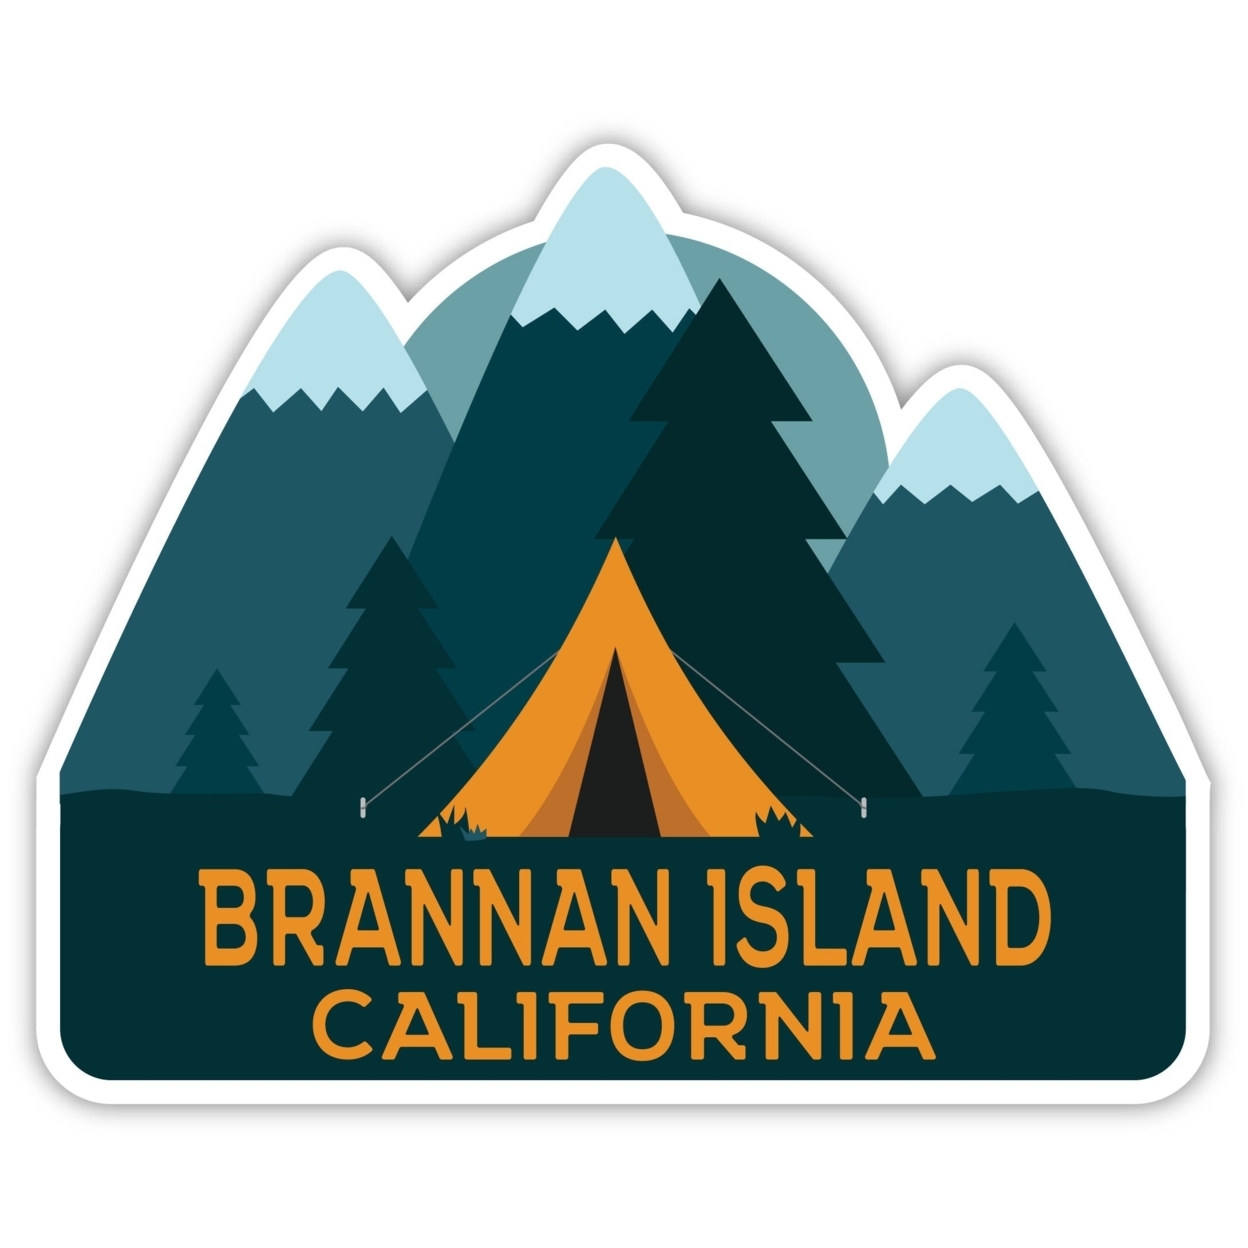 Brannan Island California Souvenir Decorative Stickers (Choose Theme And Size) - 4-Pack, 4-Inch, Tent